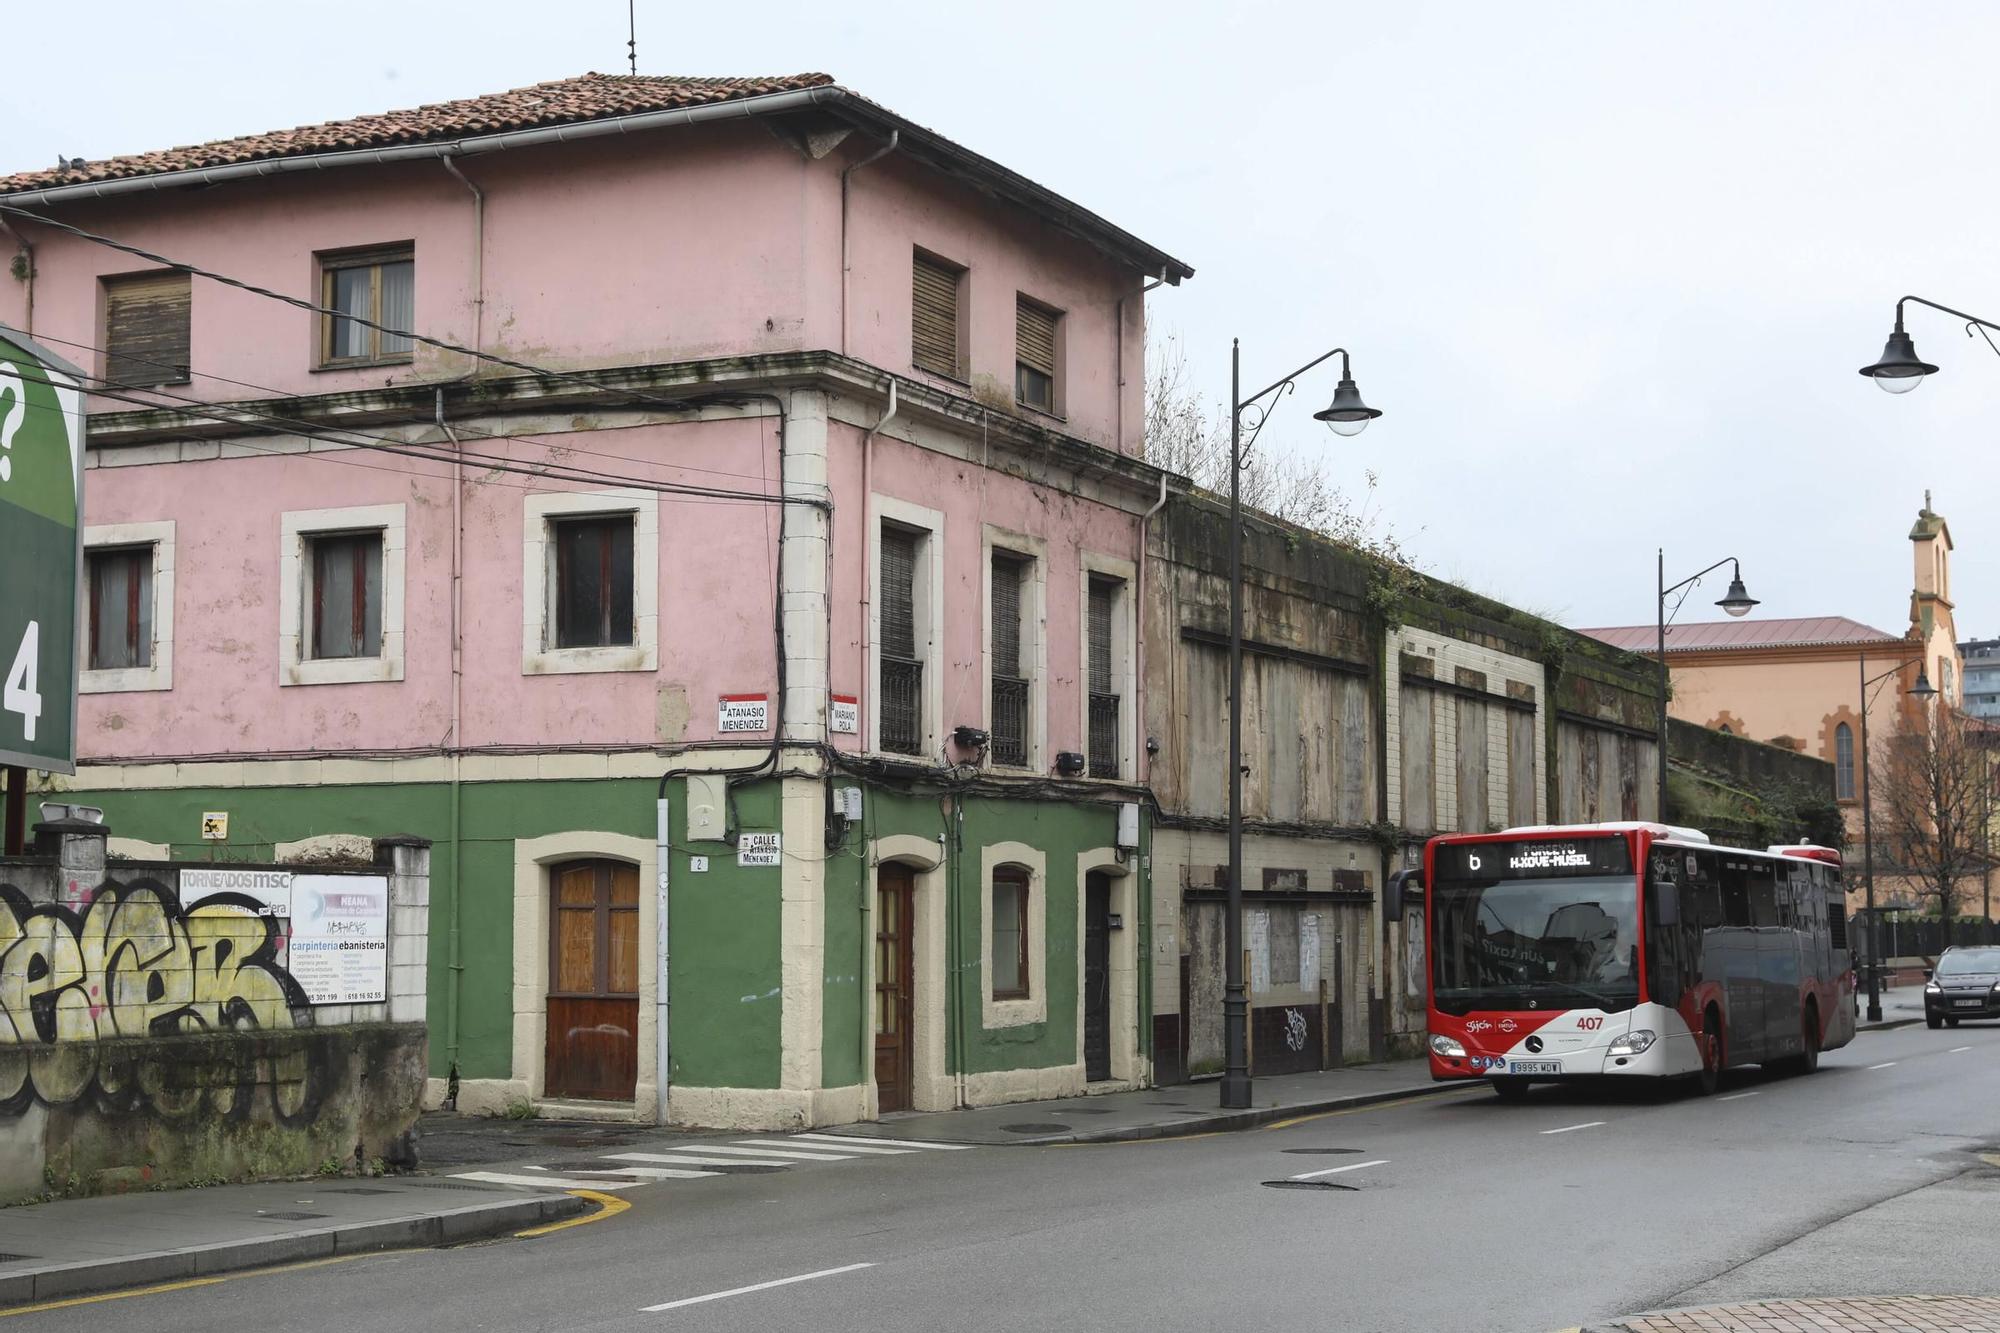 Natahoyo, el barrio más centrico de Gijón